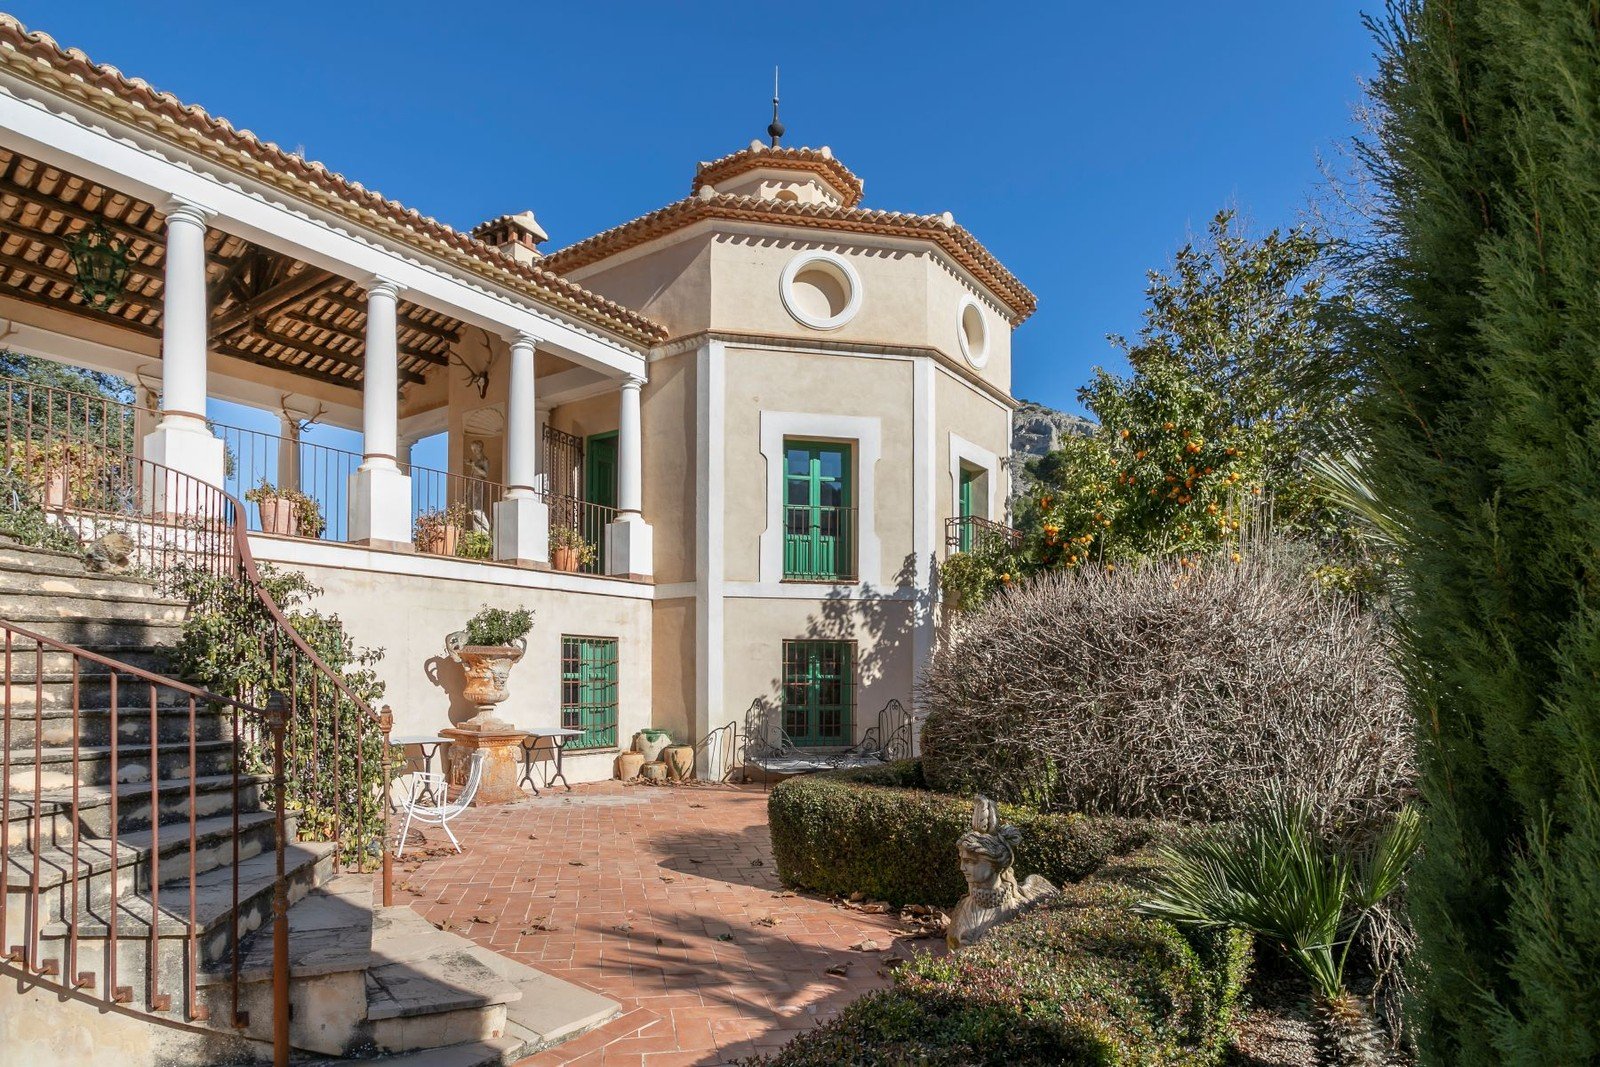 Francis York Stunning Hacienda in the Costa Blanca Hills Near Alicante, Spain 00006.jpeg